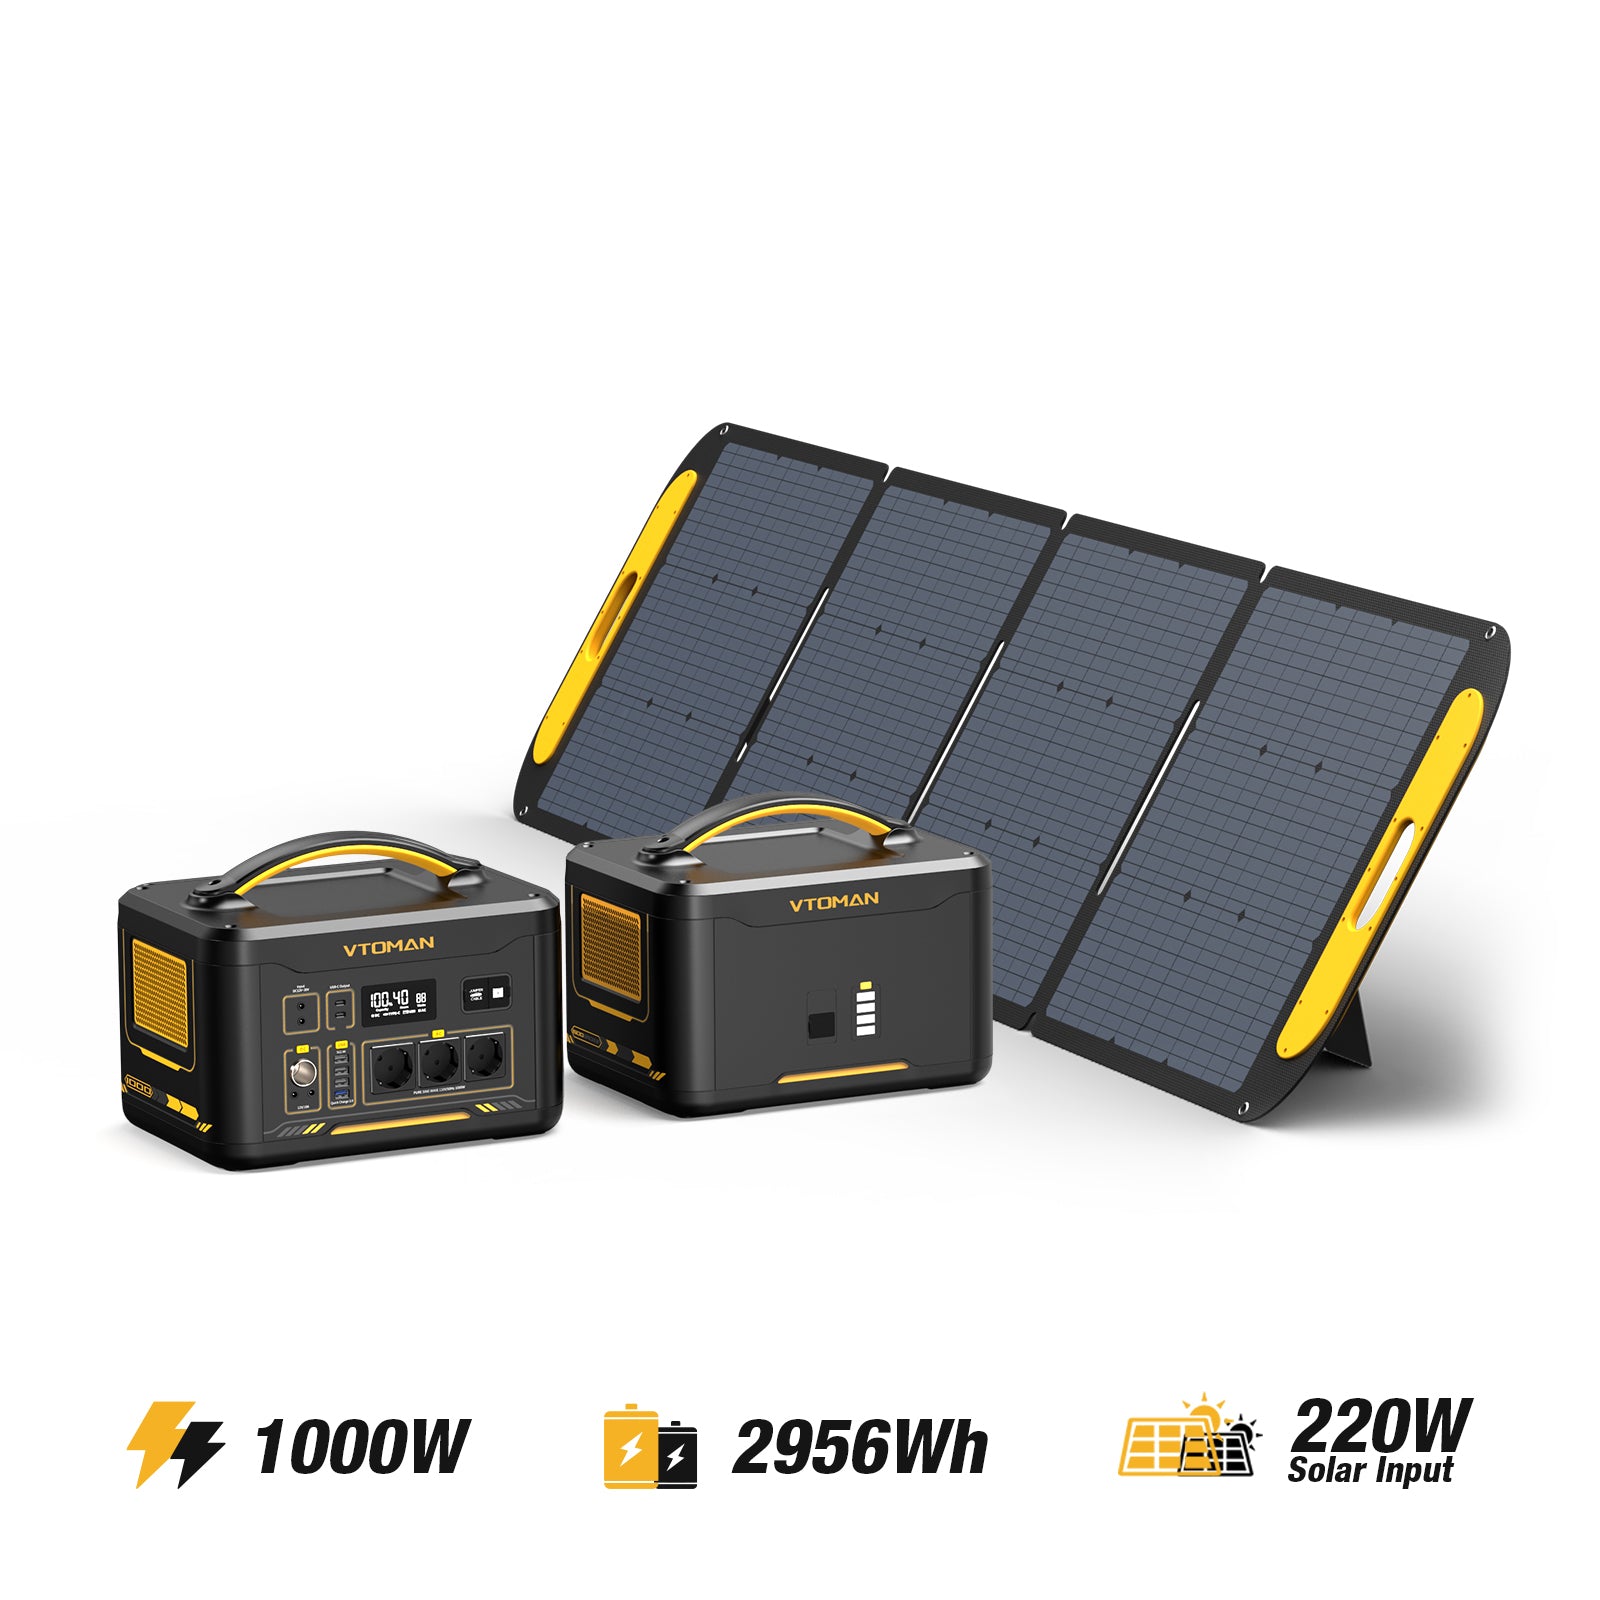 Jump 1000W/ 2956Wh 220W Solar Generator